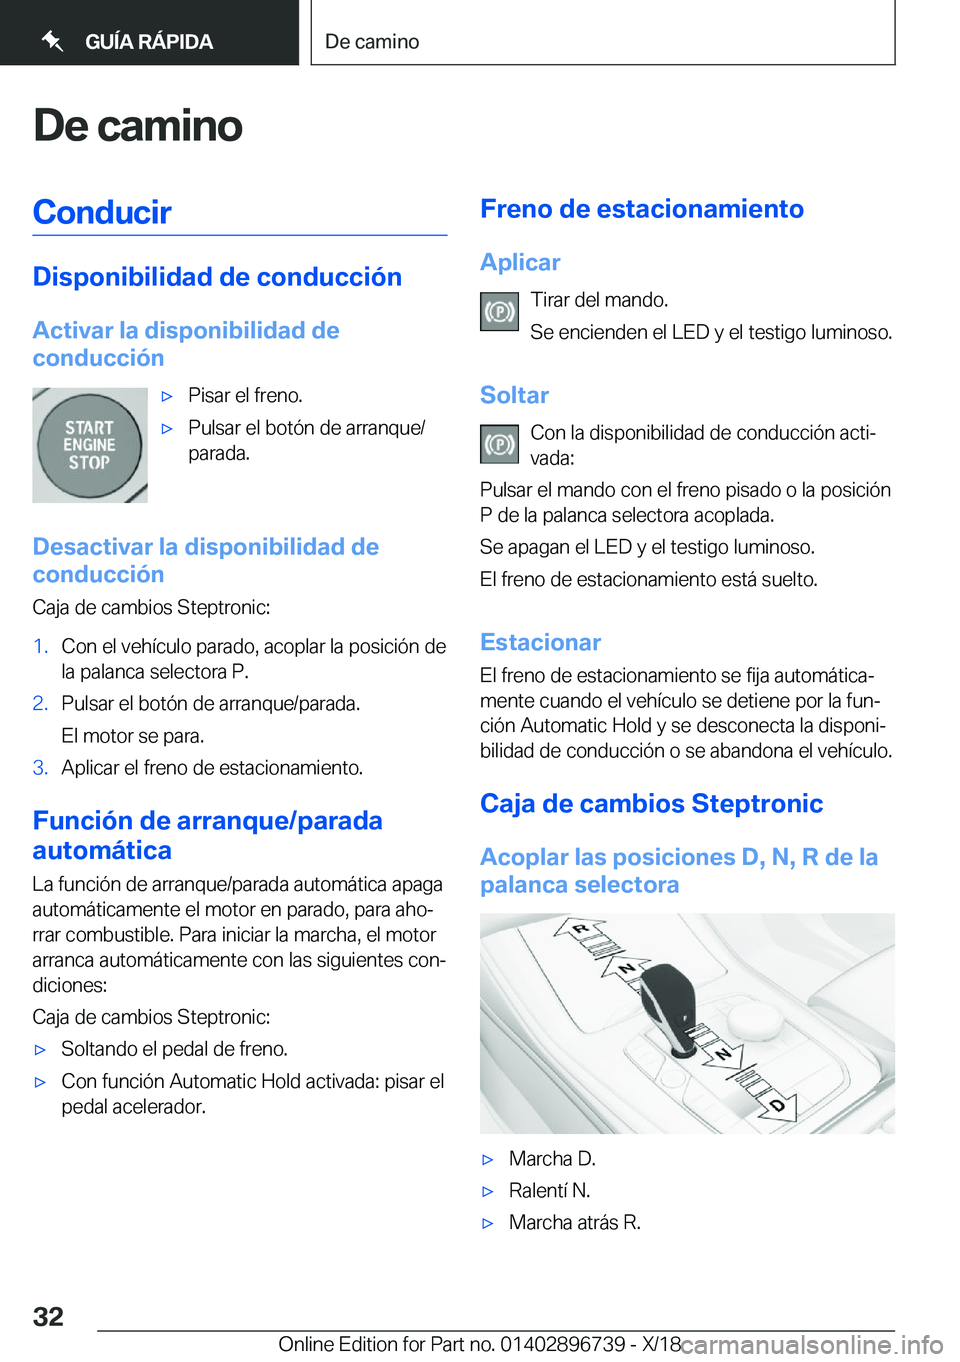 BMW X5 2019  Manuales de Empleo (in Spanish) �D�e��c�a�m�i�n�o�C�o�n�d�u�c�i�r
�D�i�s�p�o�n�i�b�i�l�i�d�a�d��d�e��c�o�n�d�u�c�c�i�